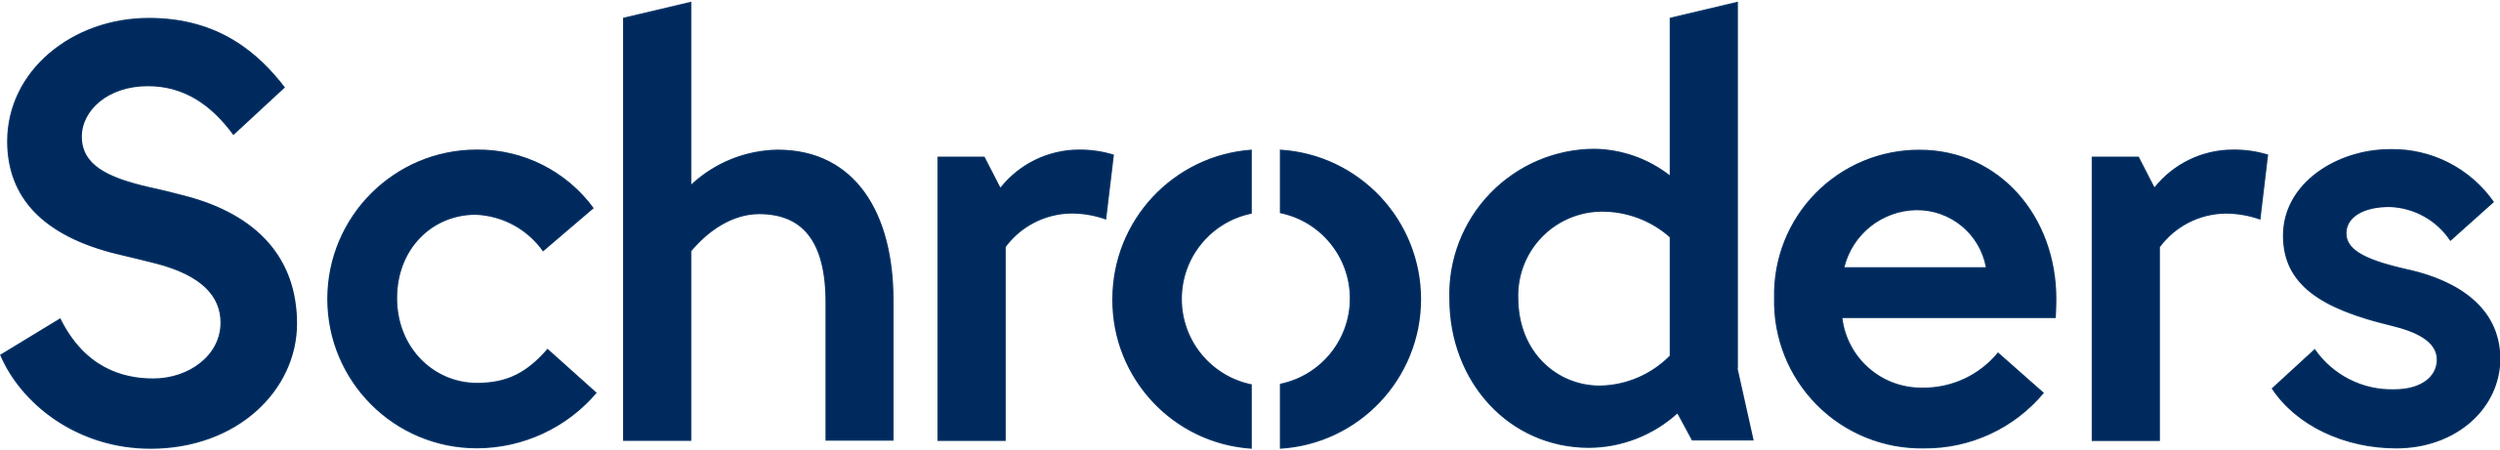 Schroders_plc_logo.svg.png